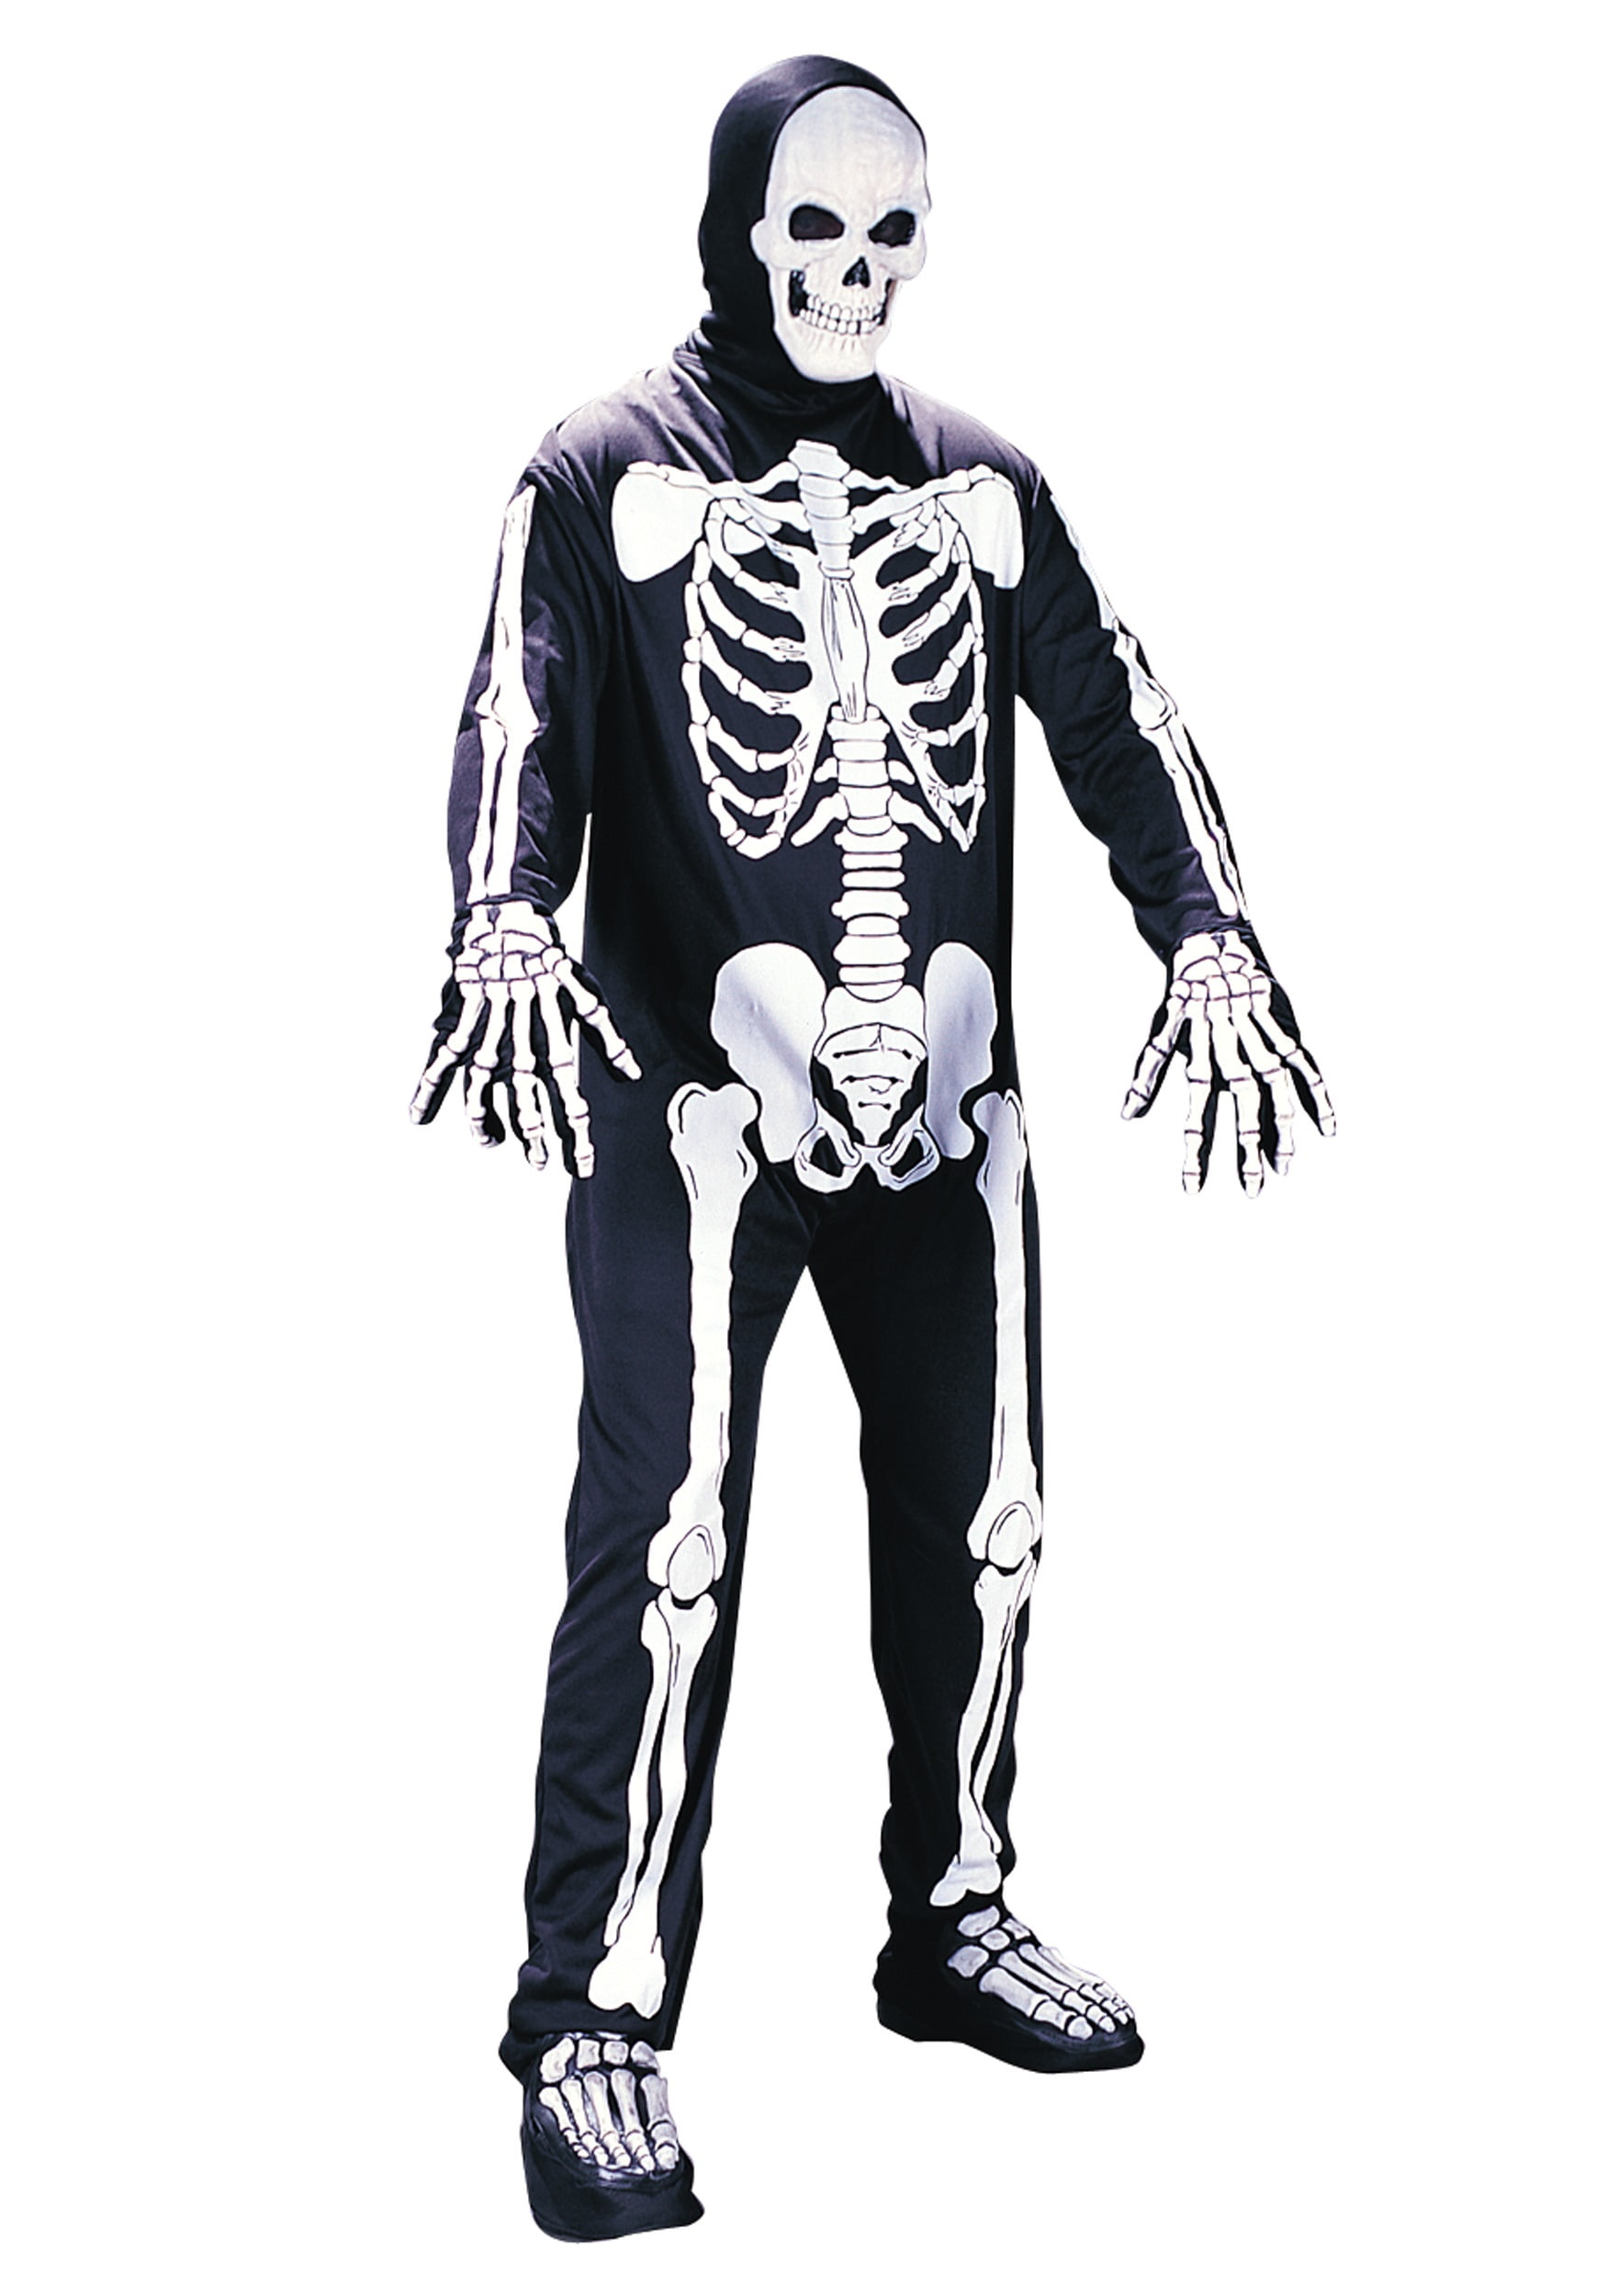 Mangle syre Konflikt Plus Size Scary Skeleton Costume - Walmart.com